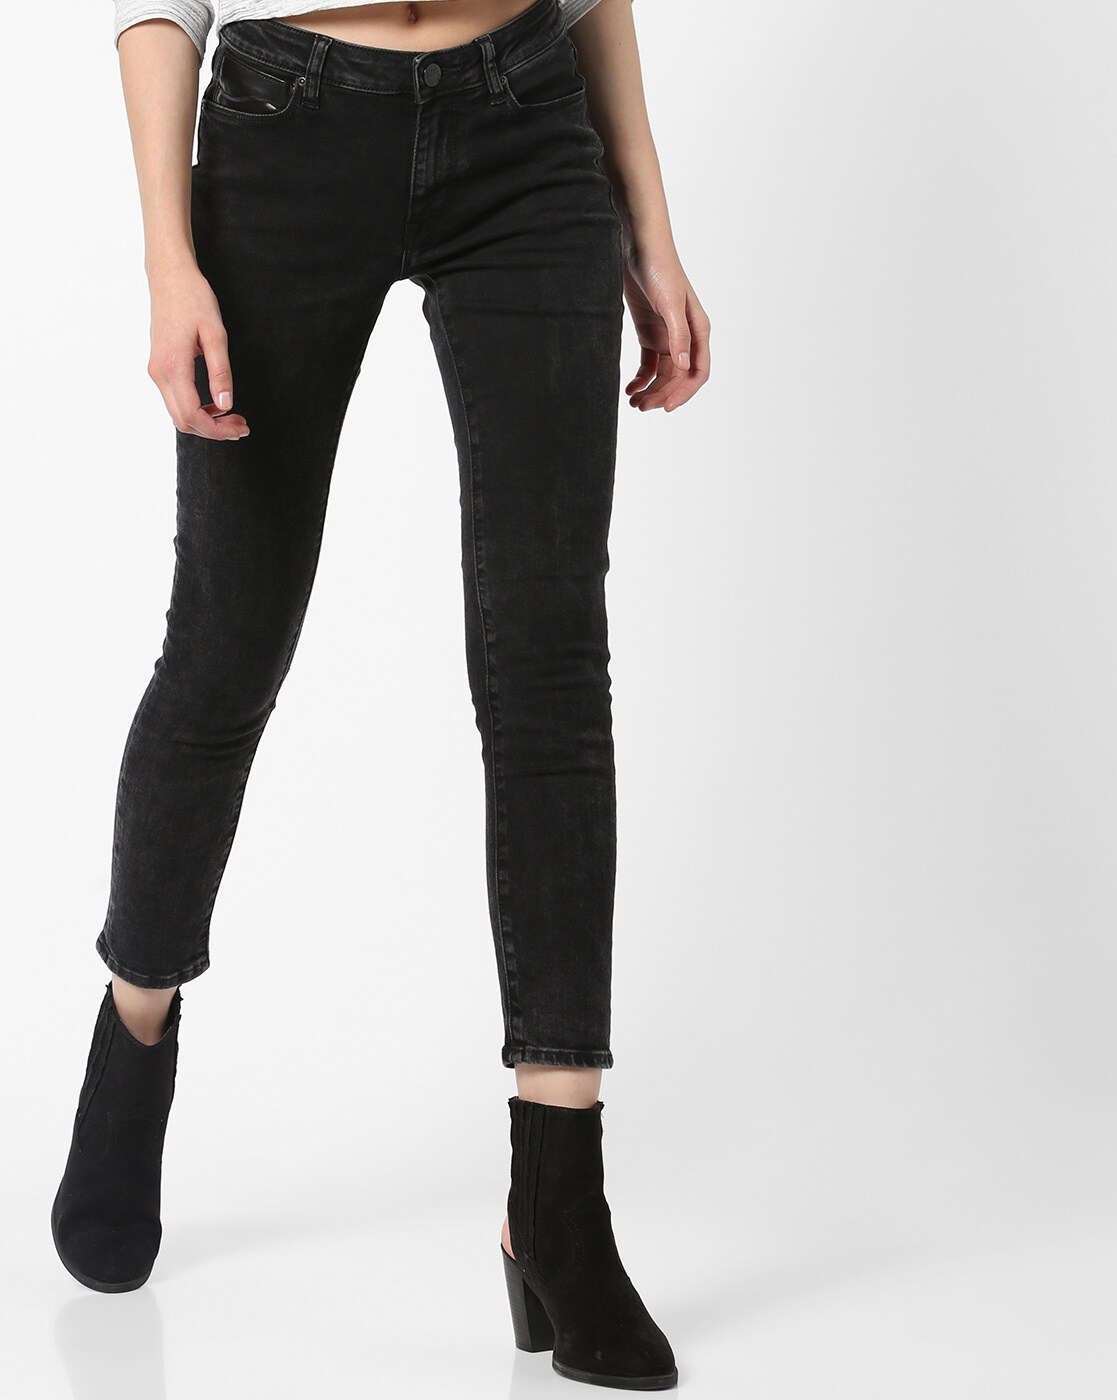 black jeans ankle length